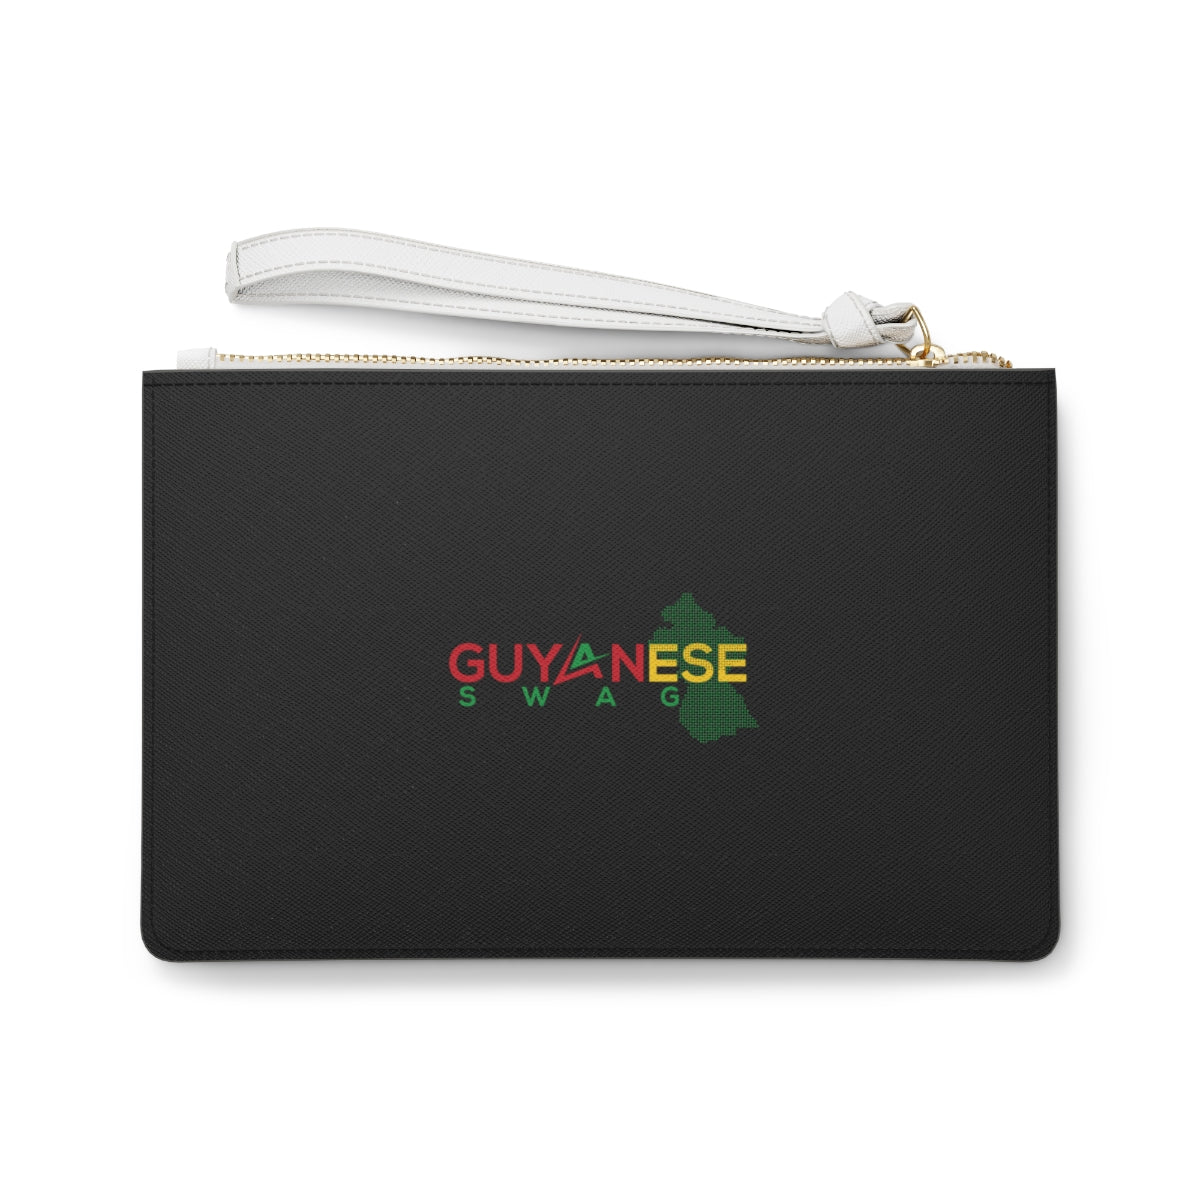 Guyanese Swag Clutch Bag.